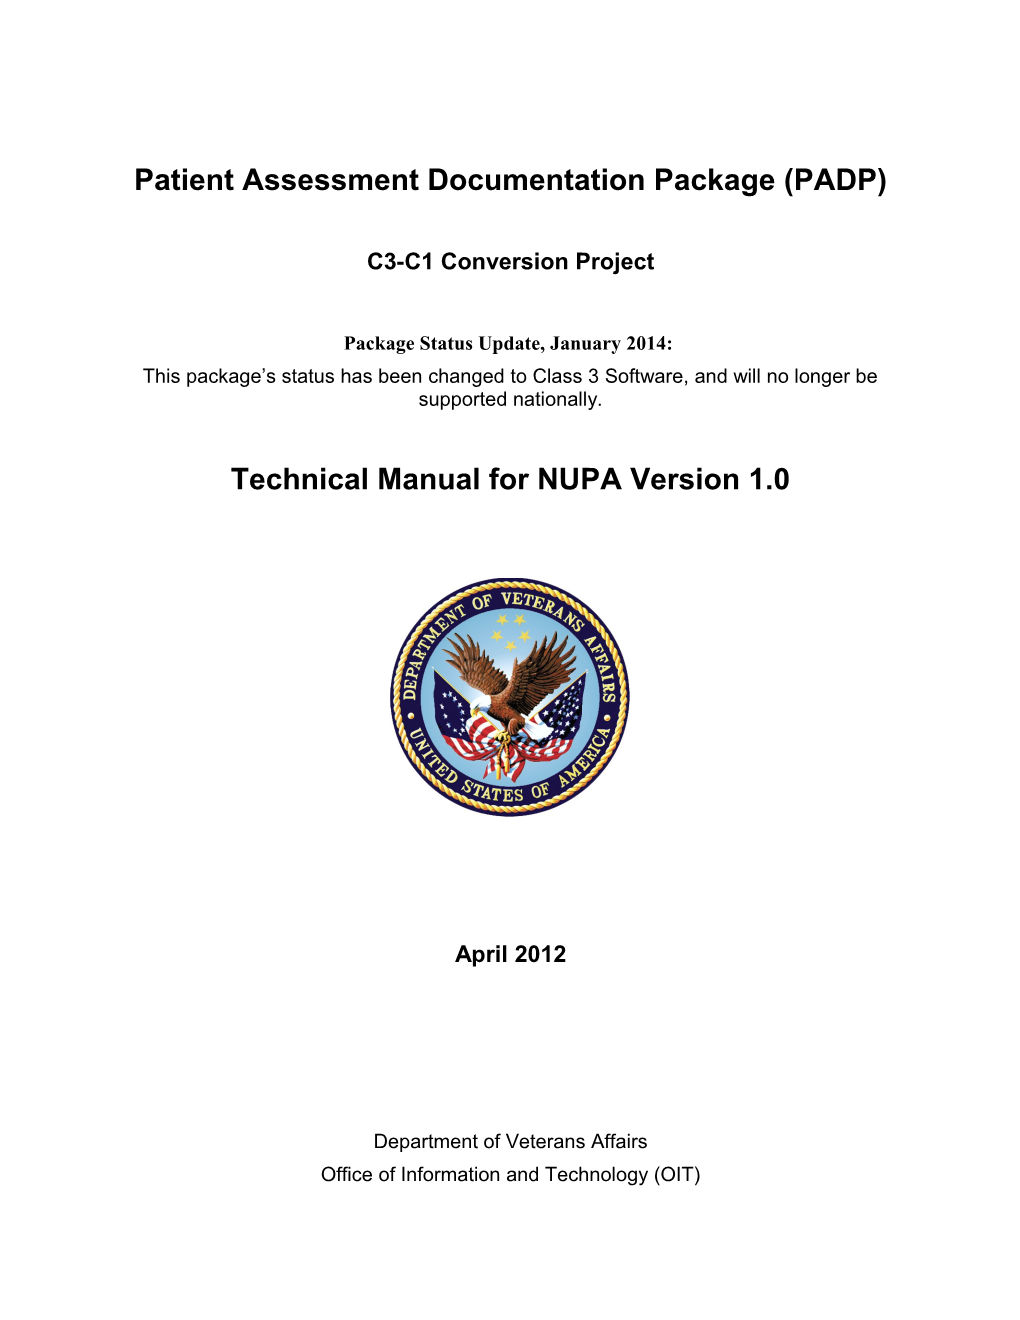 PADP Technical Manual